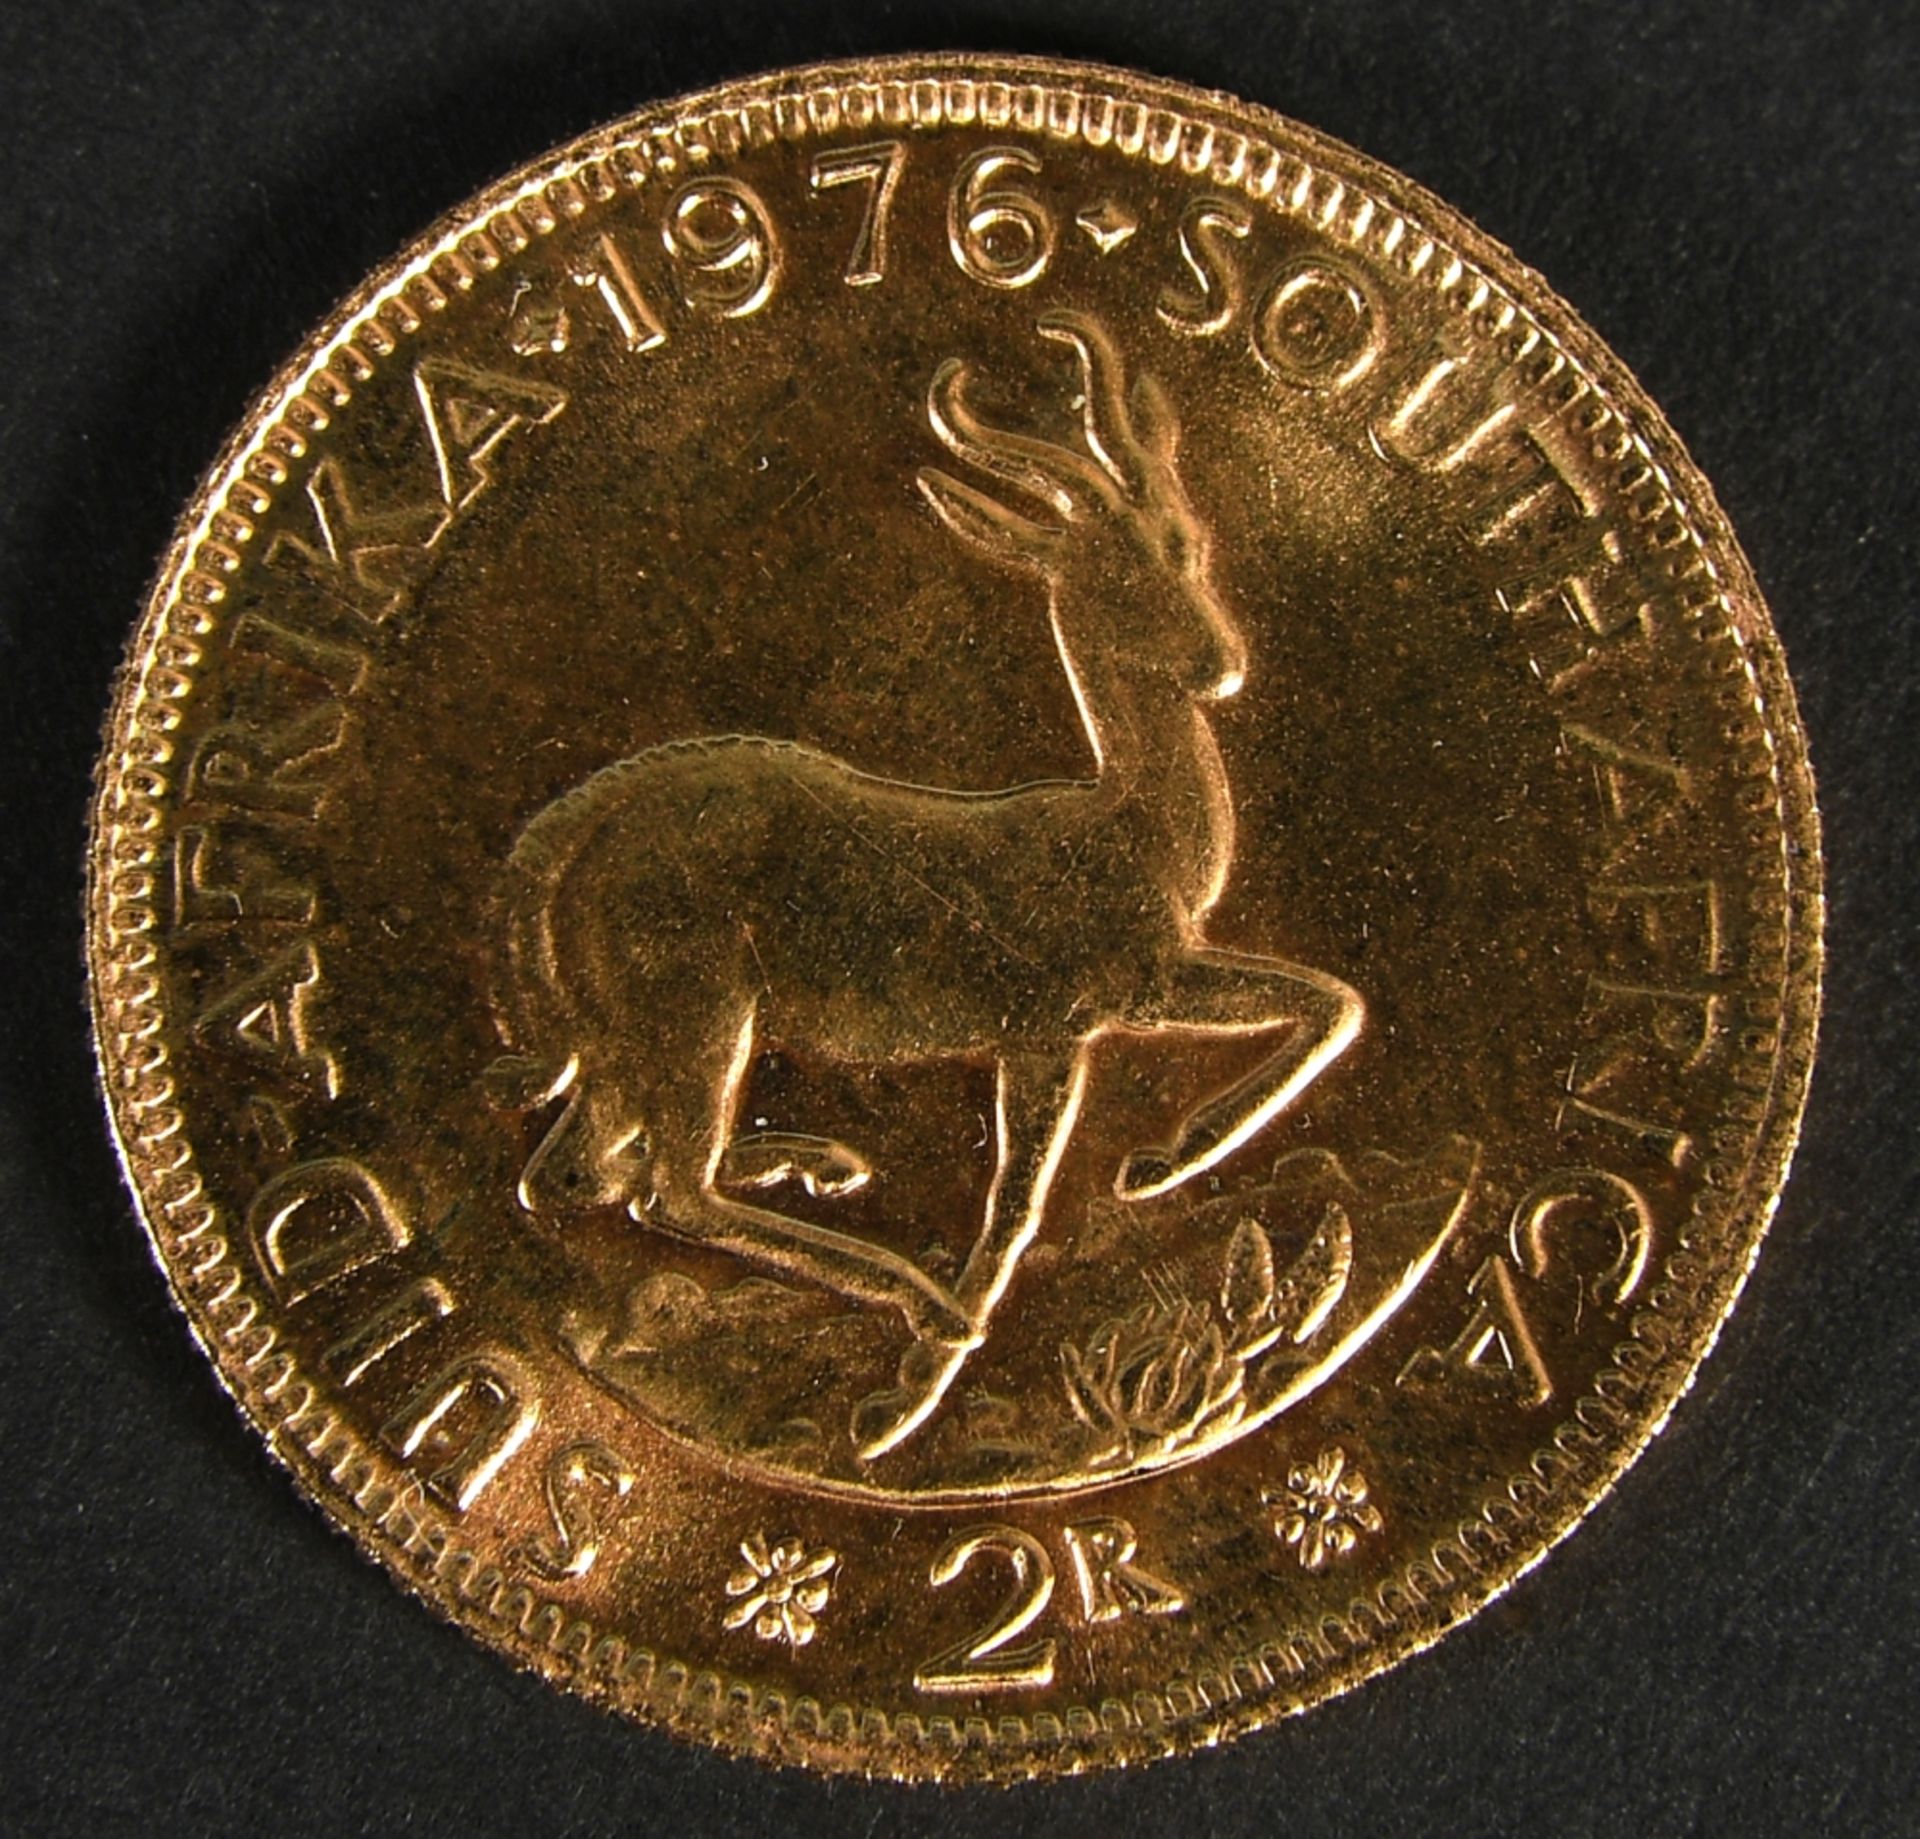 Münze - Goldmünze "2 Rand 1976" - Image 2 of 3